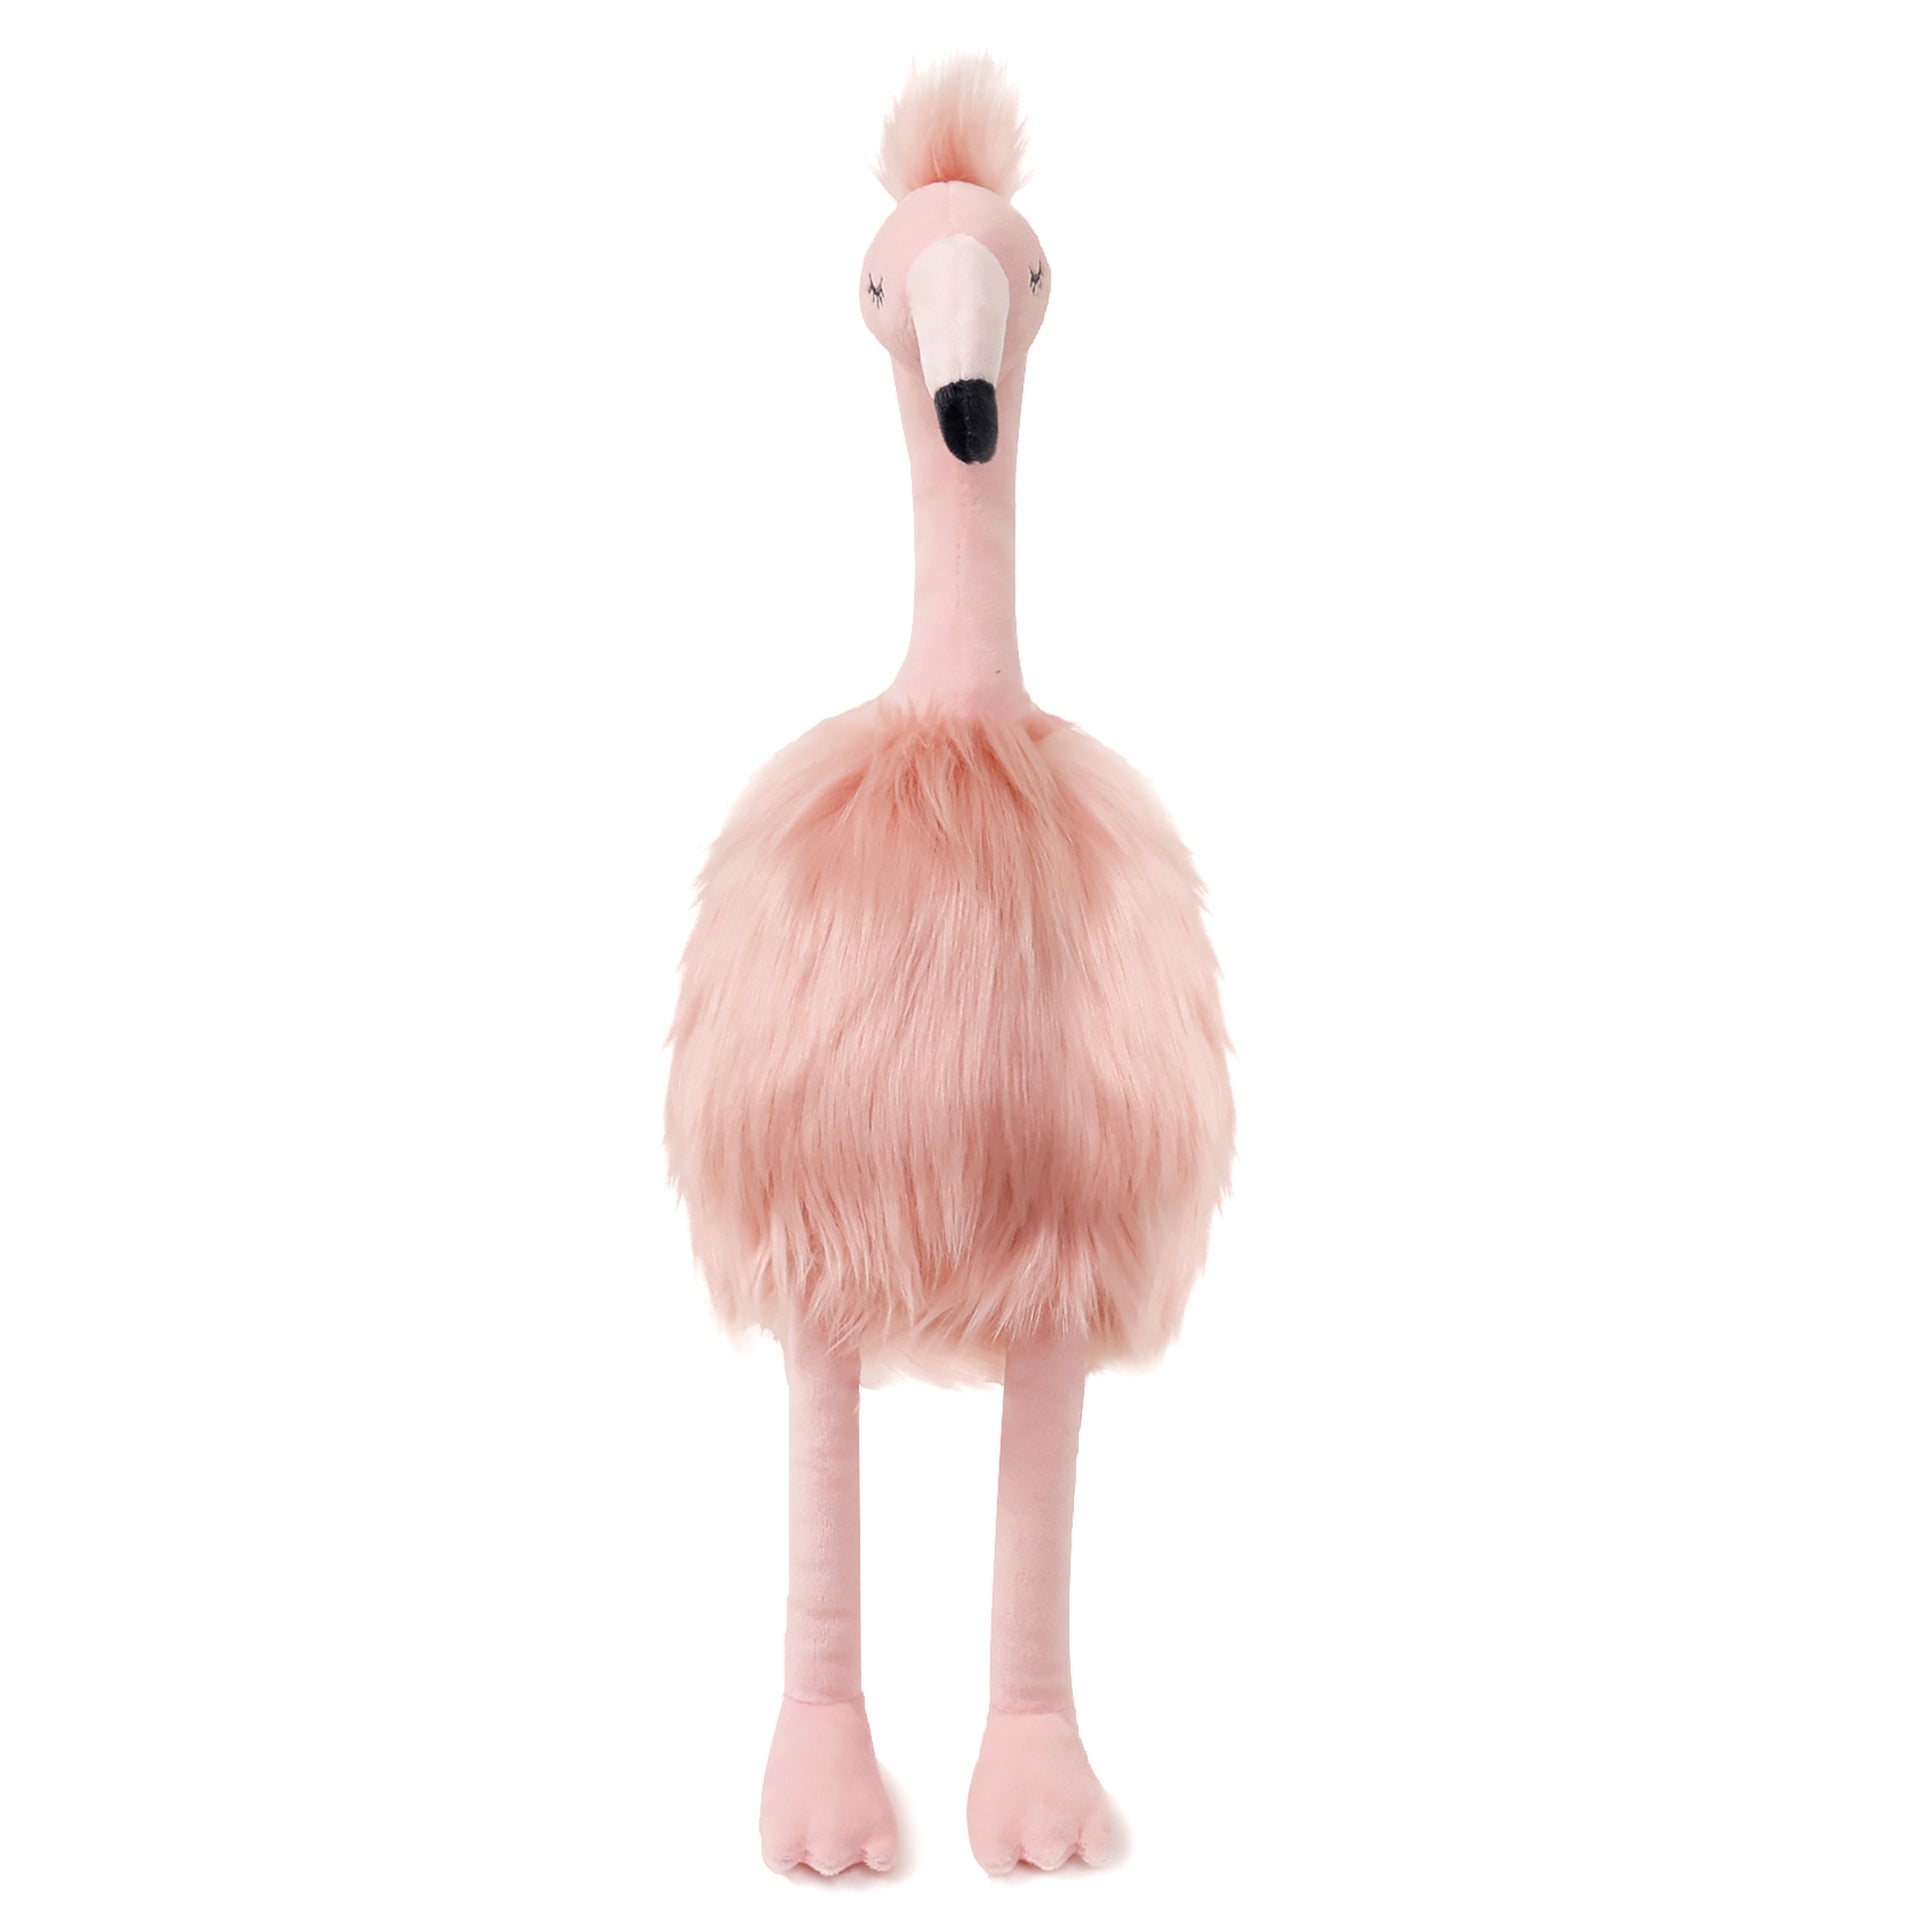 gloria flamingo stuffed animal toy, Designed by OB in Australia